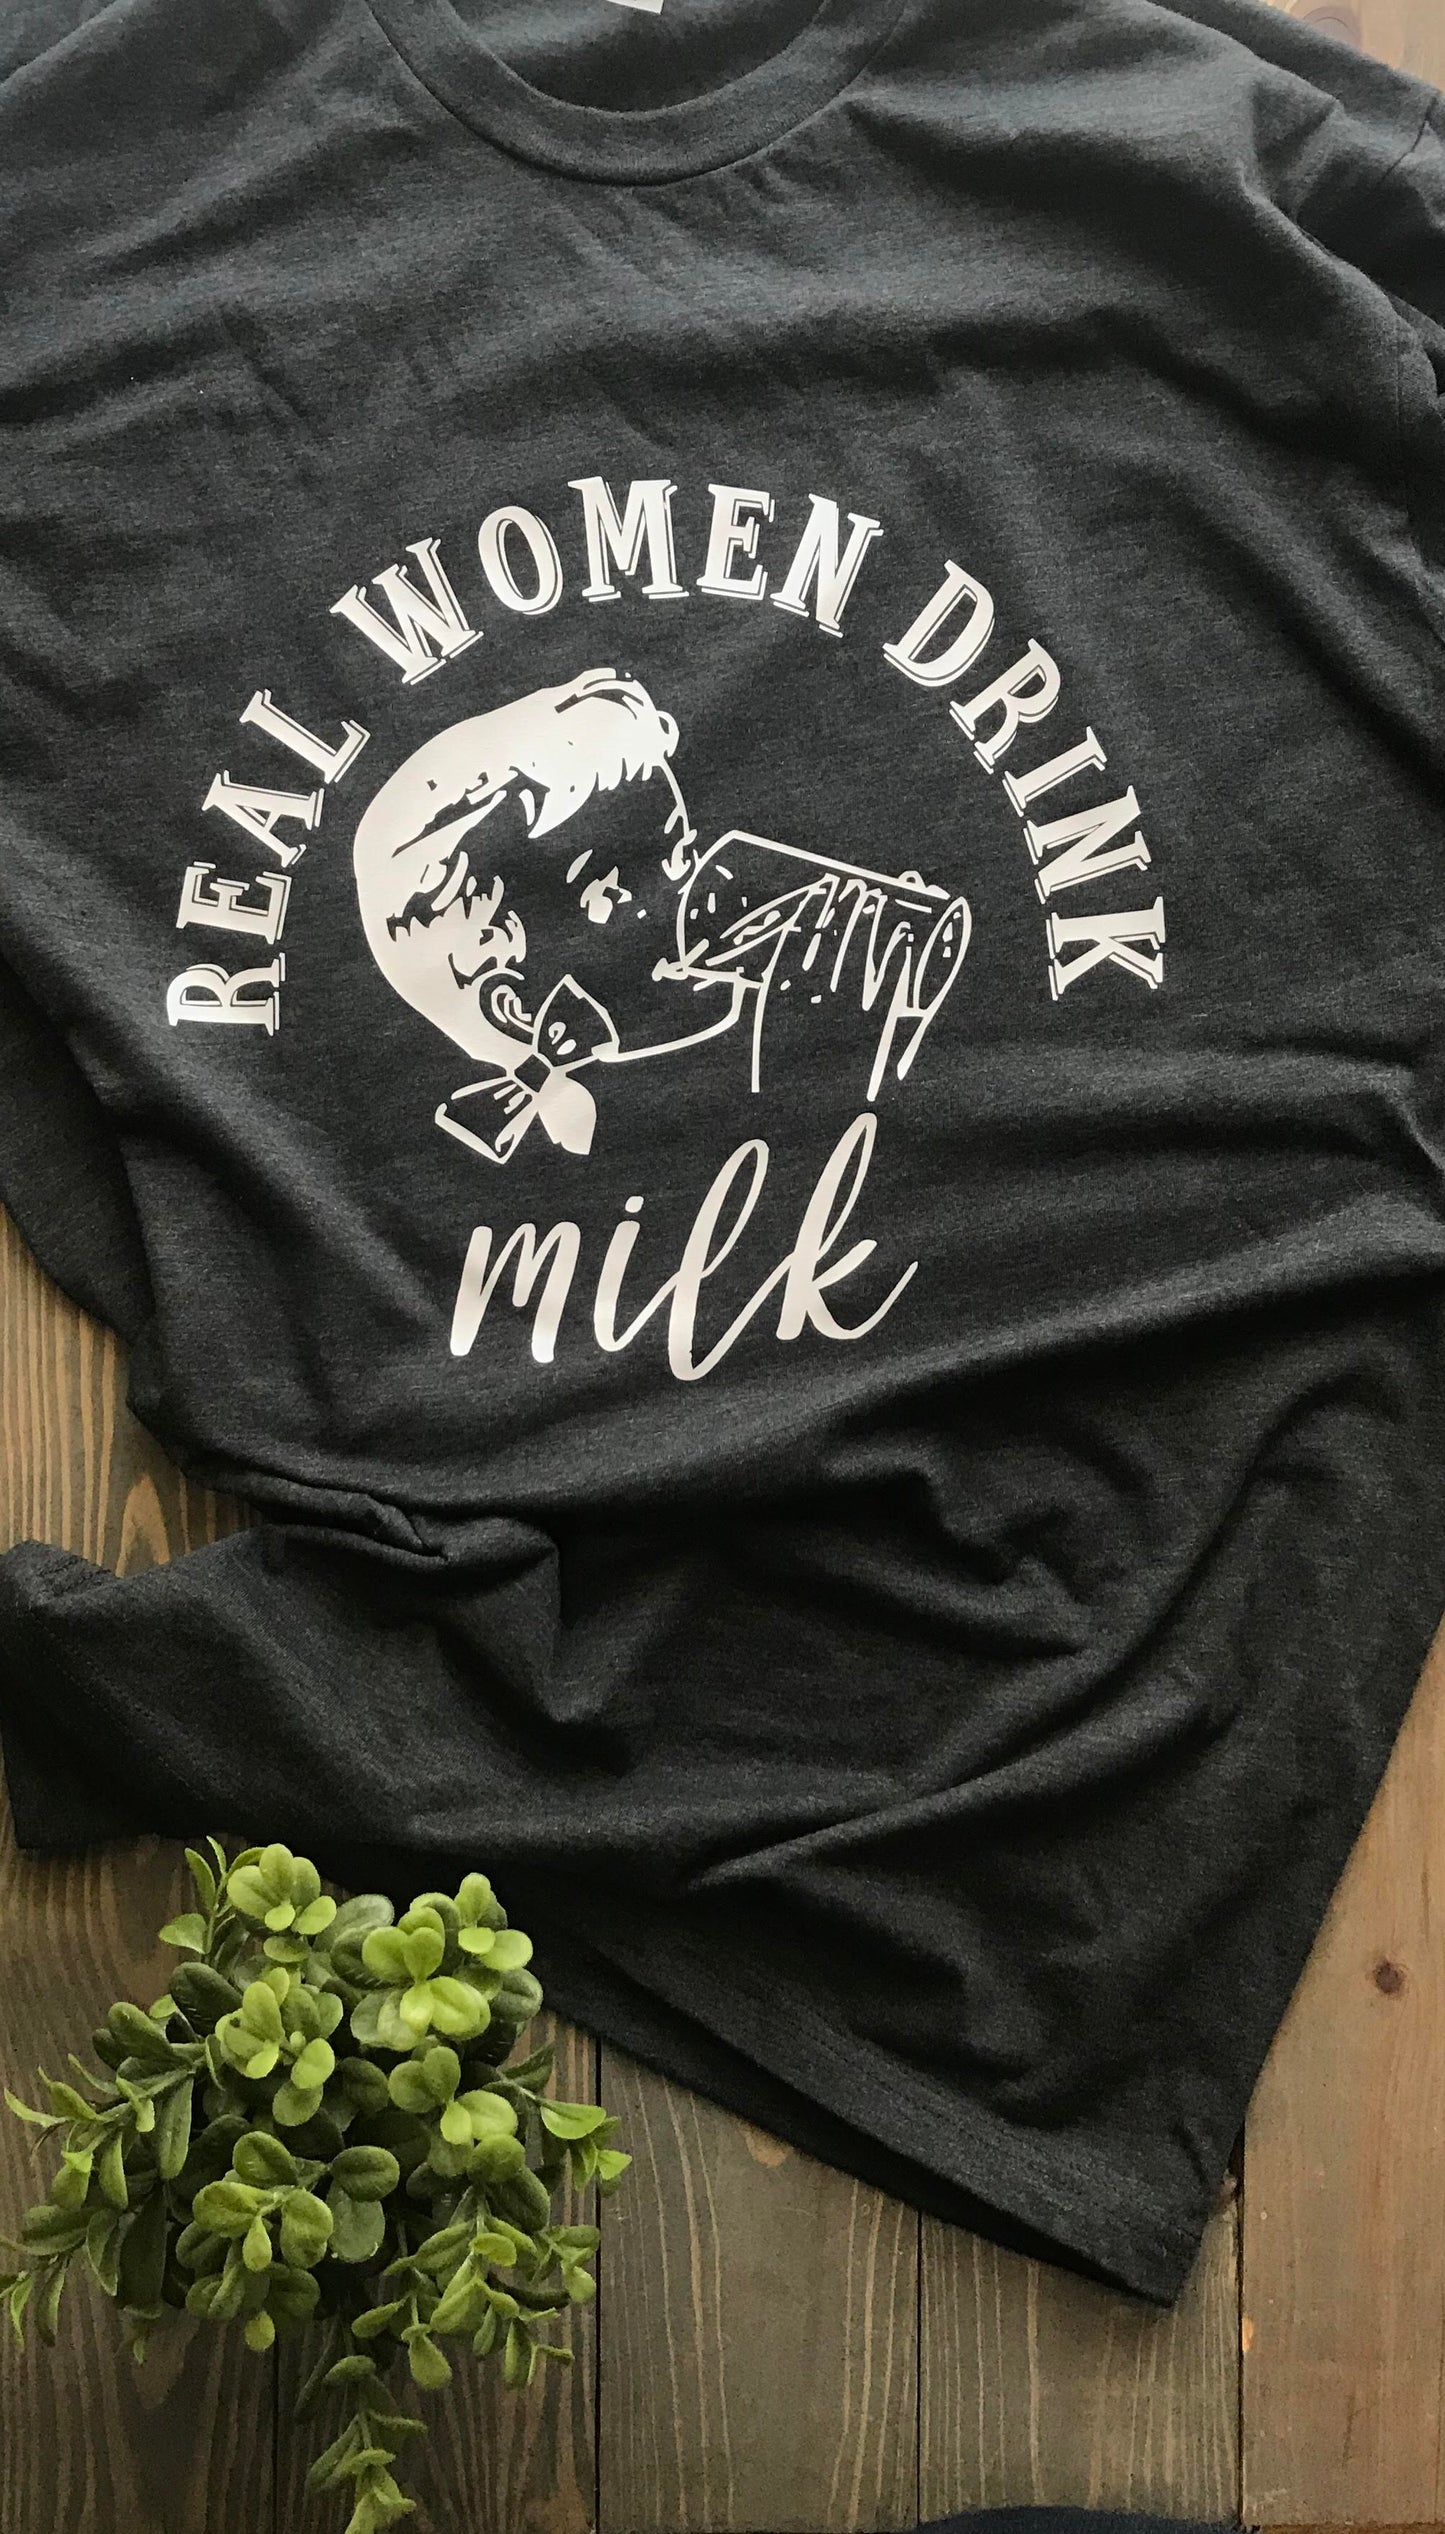 REAL WOMEN DRINK MILK